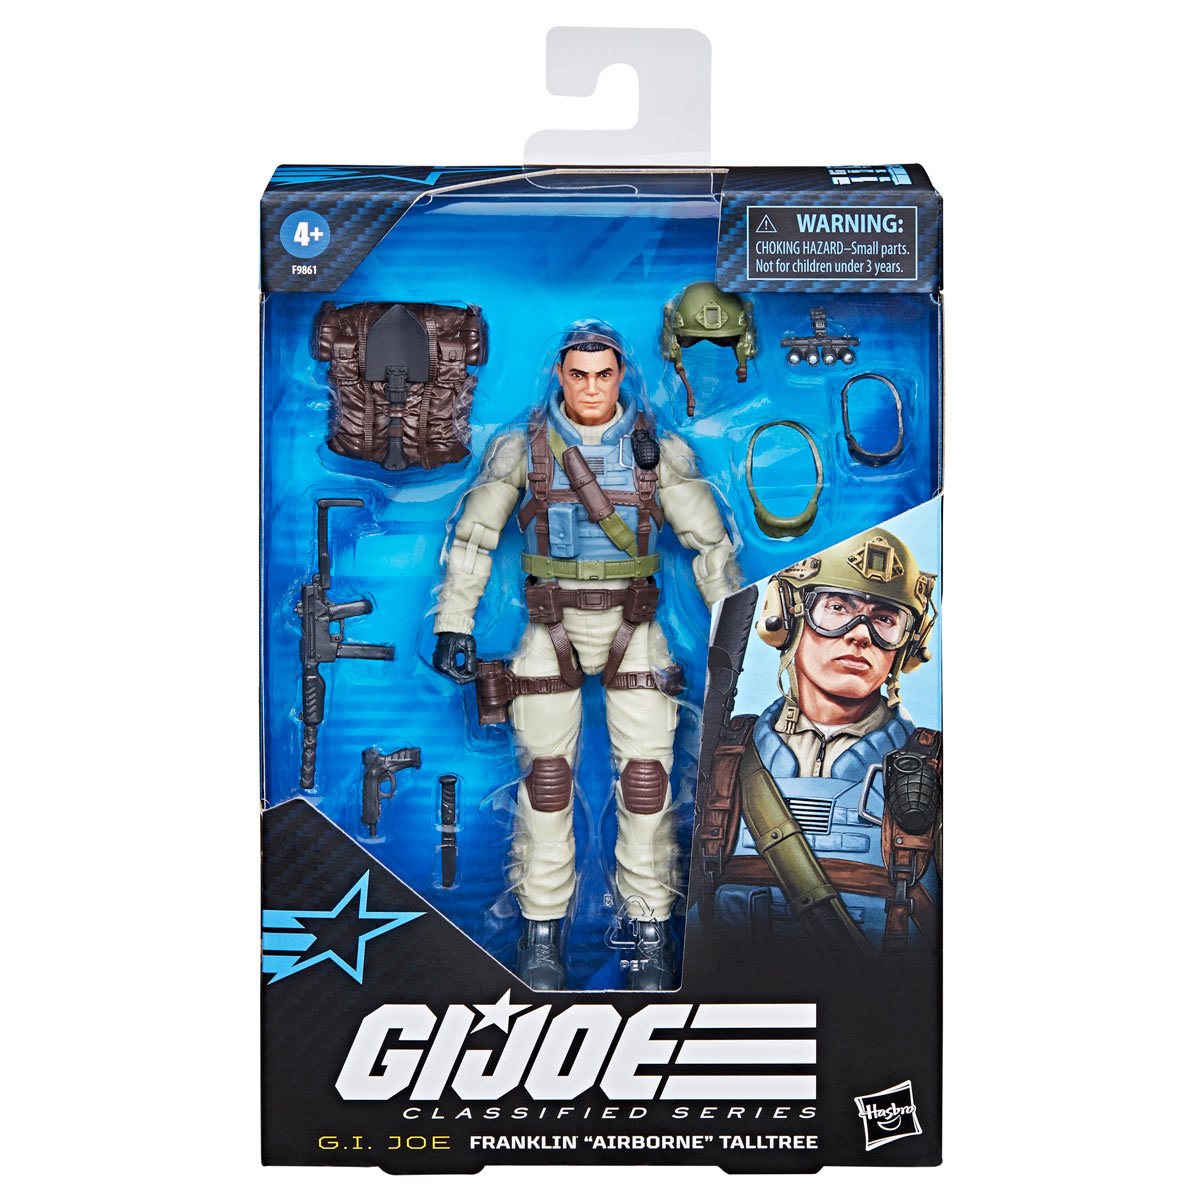 G.I. Joe Classified Series Airborne